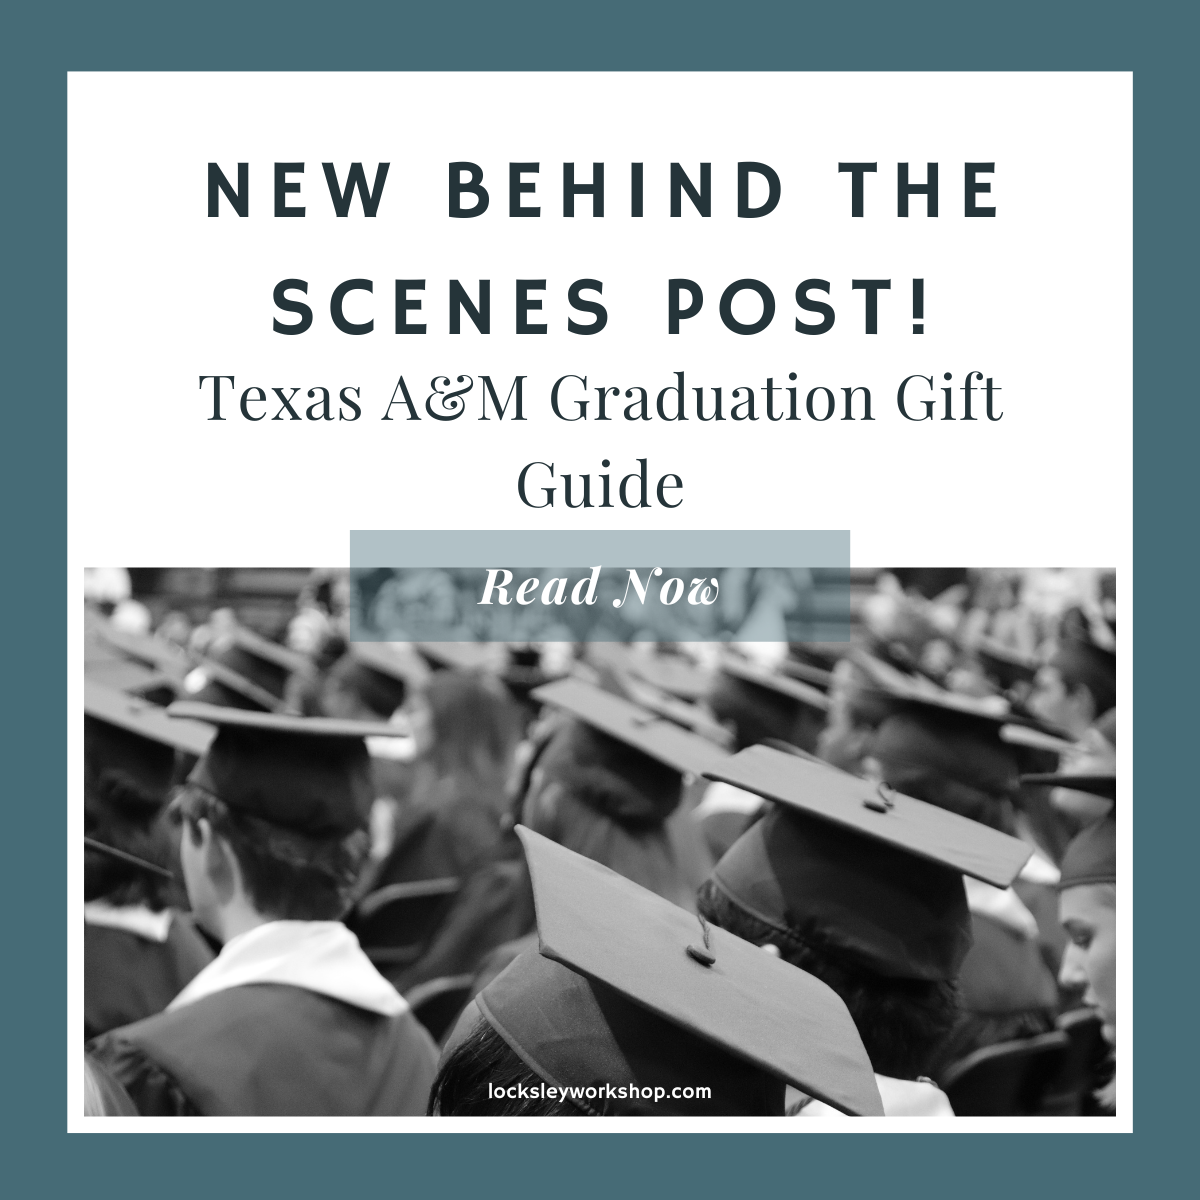 A Guide to Texas A&M Graduation